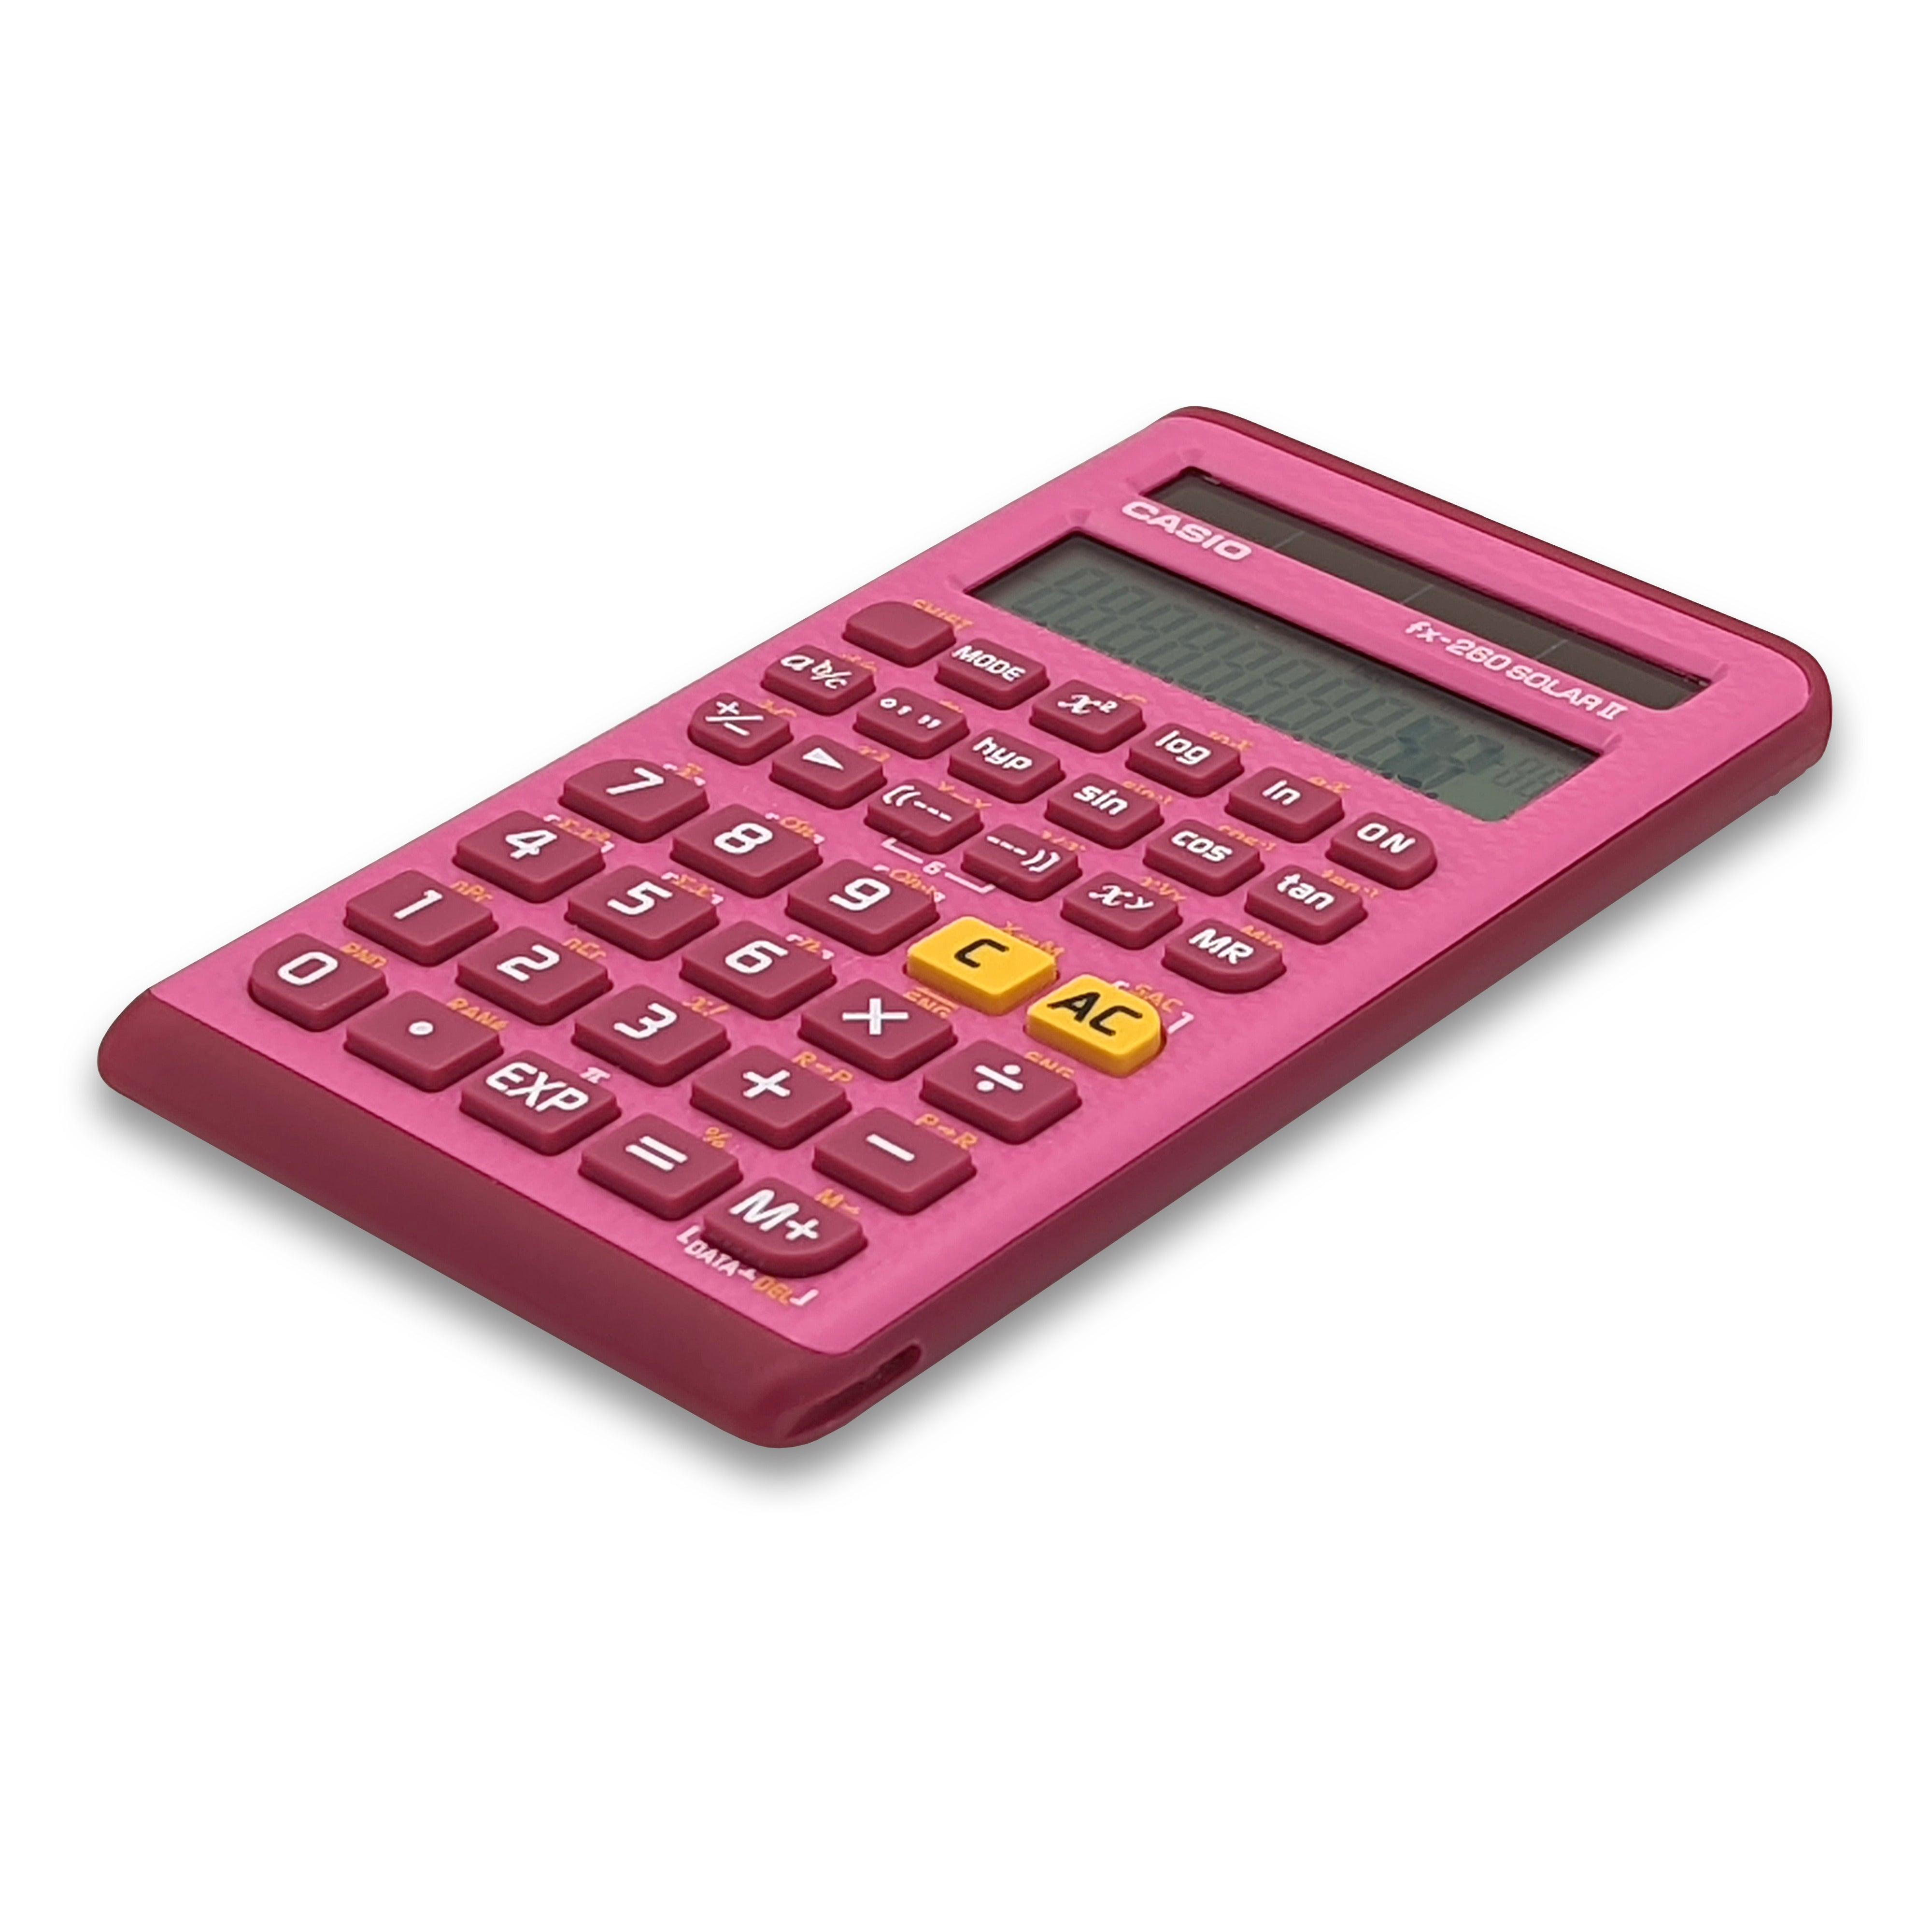 Casio fx-260 SOLAR II Calculator - Pink - Underwood Distributing Co.